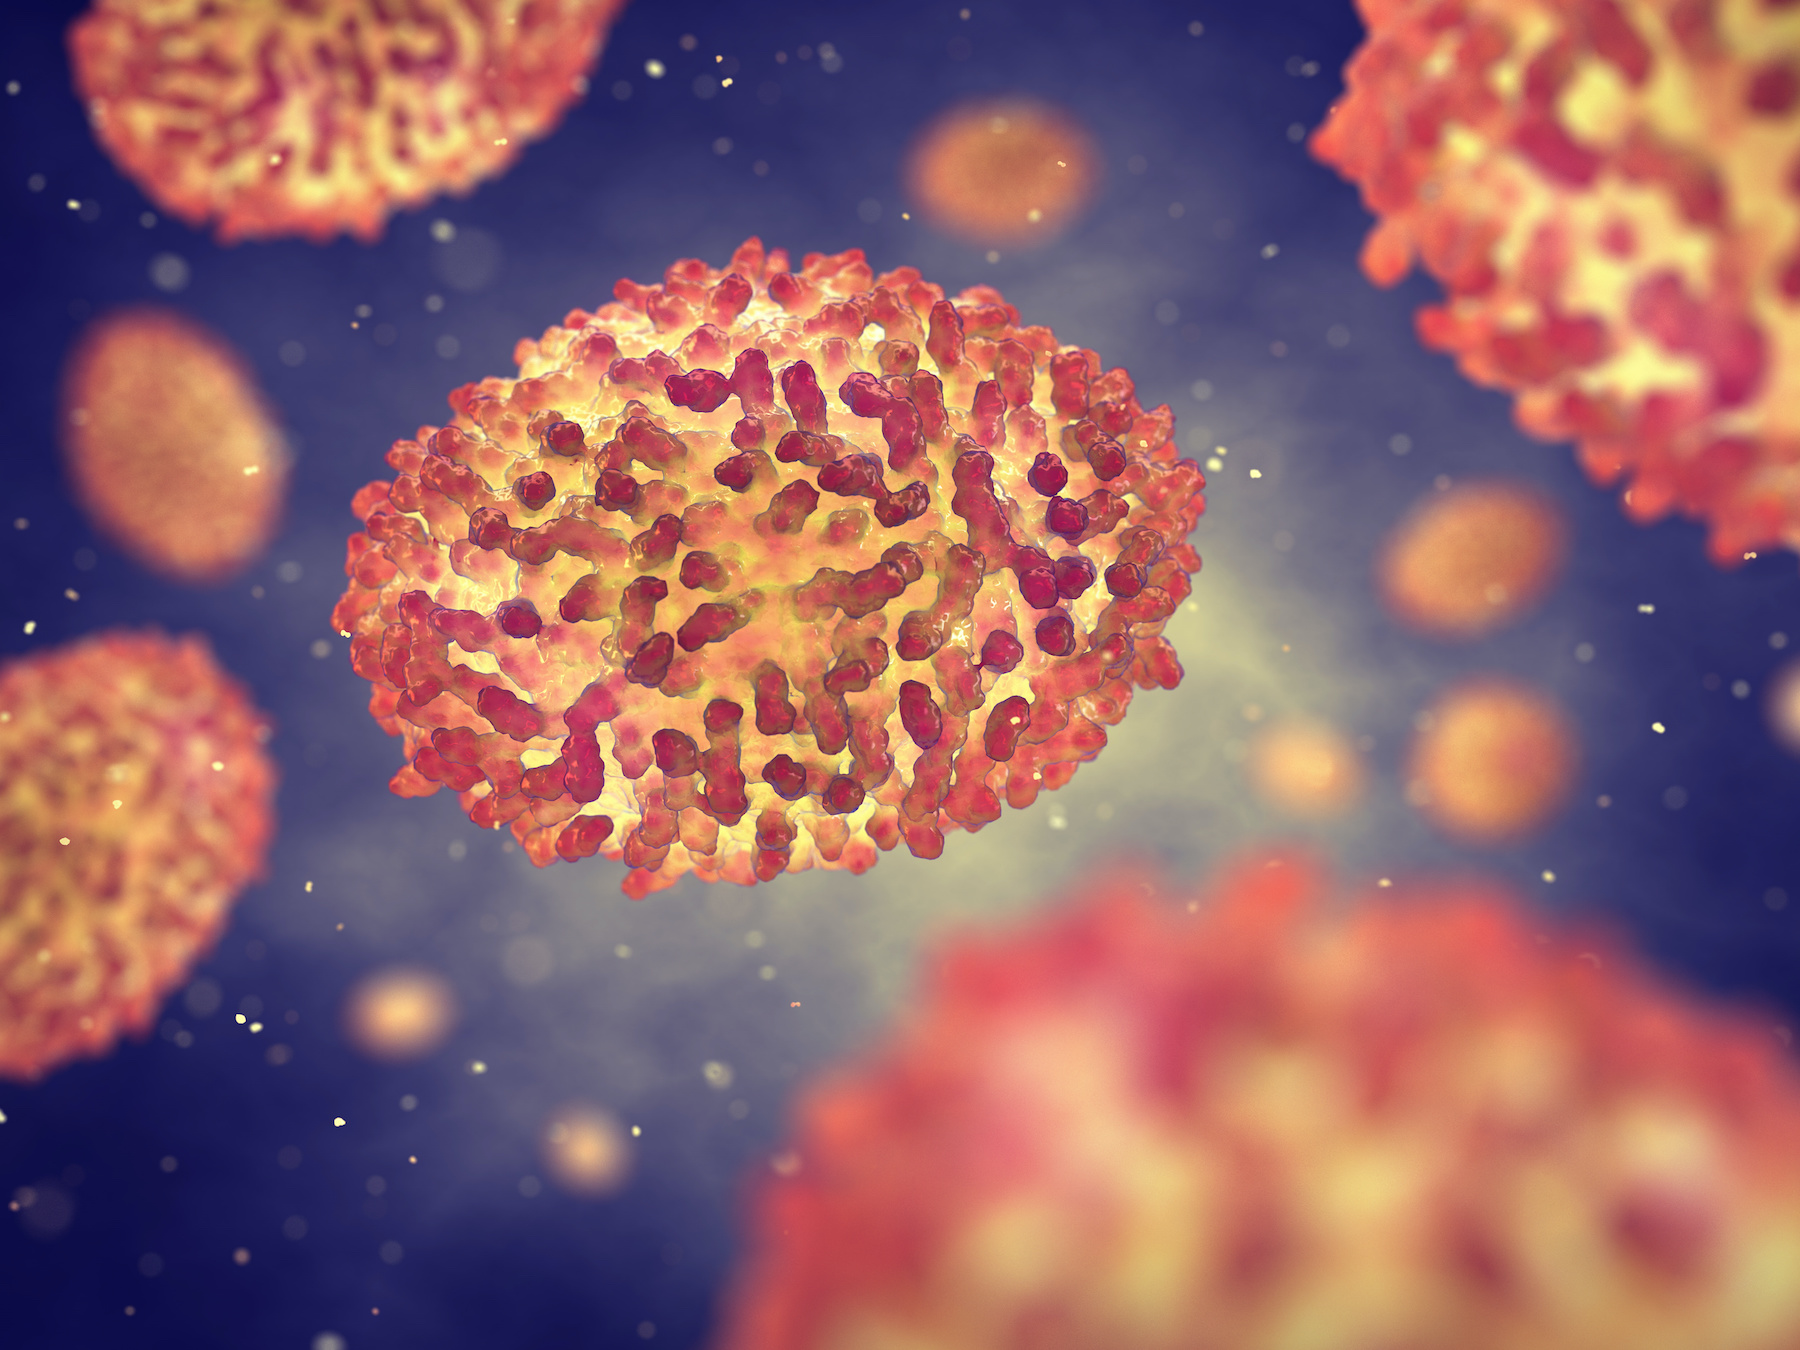 La vaccination a permis d’éradiquer le virus de la variole. © nobeastsofierce, Adobe Stock